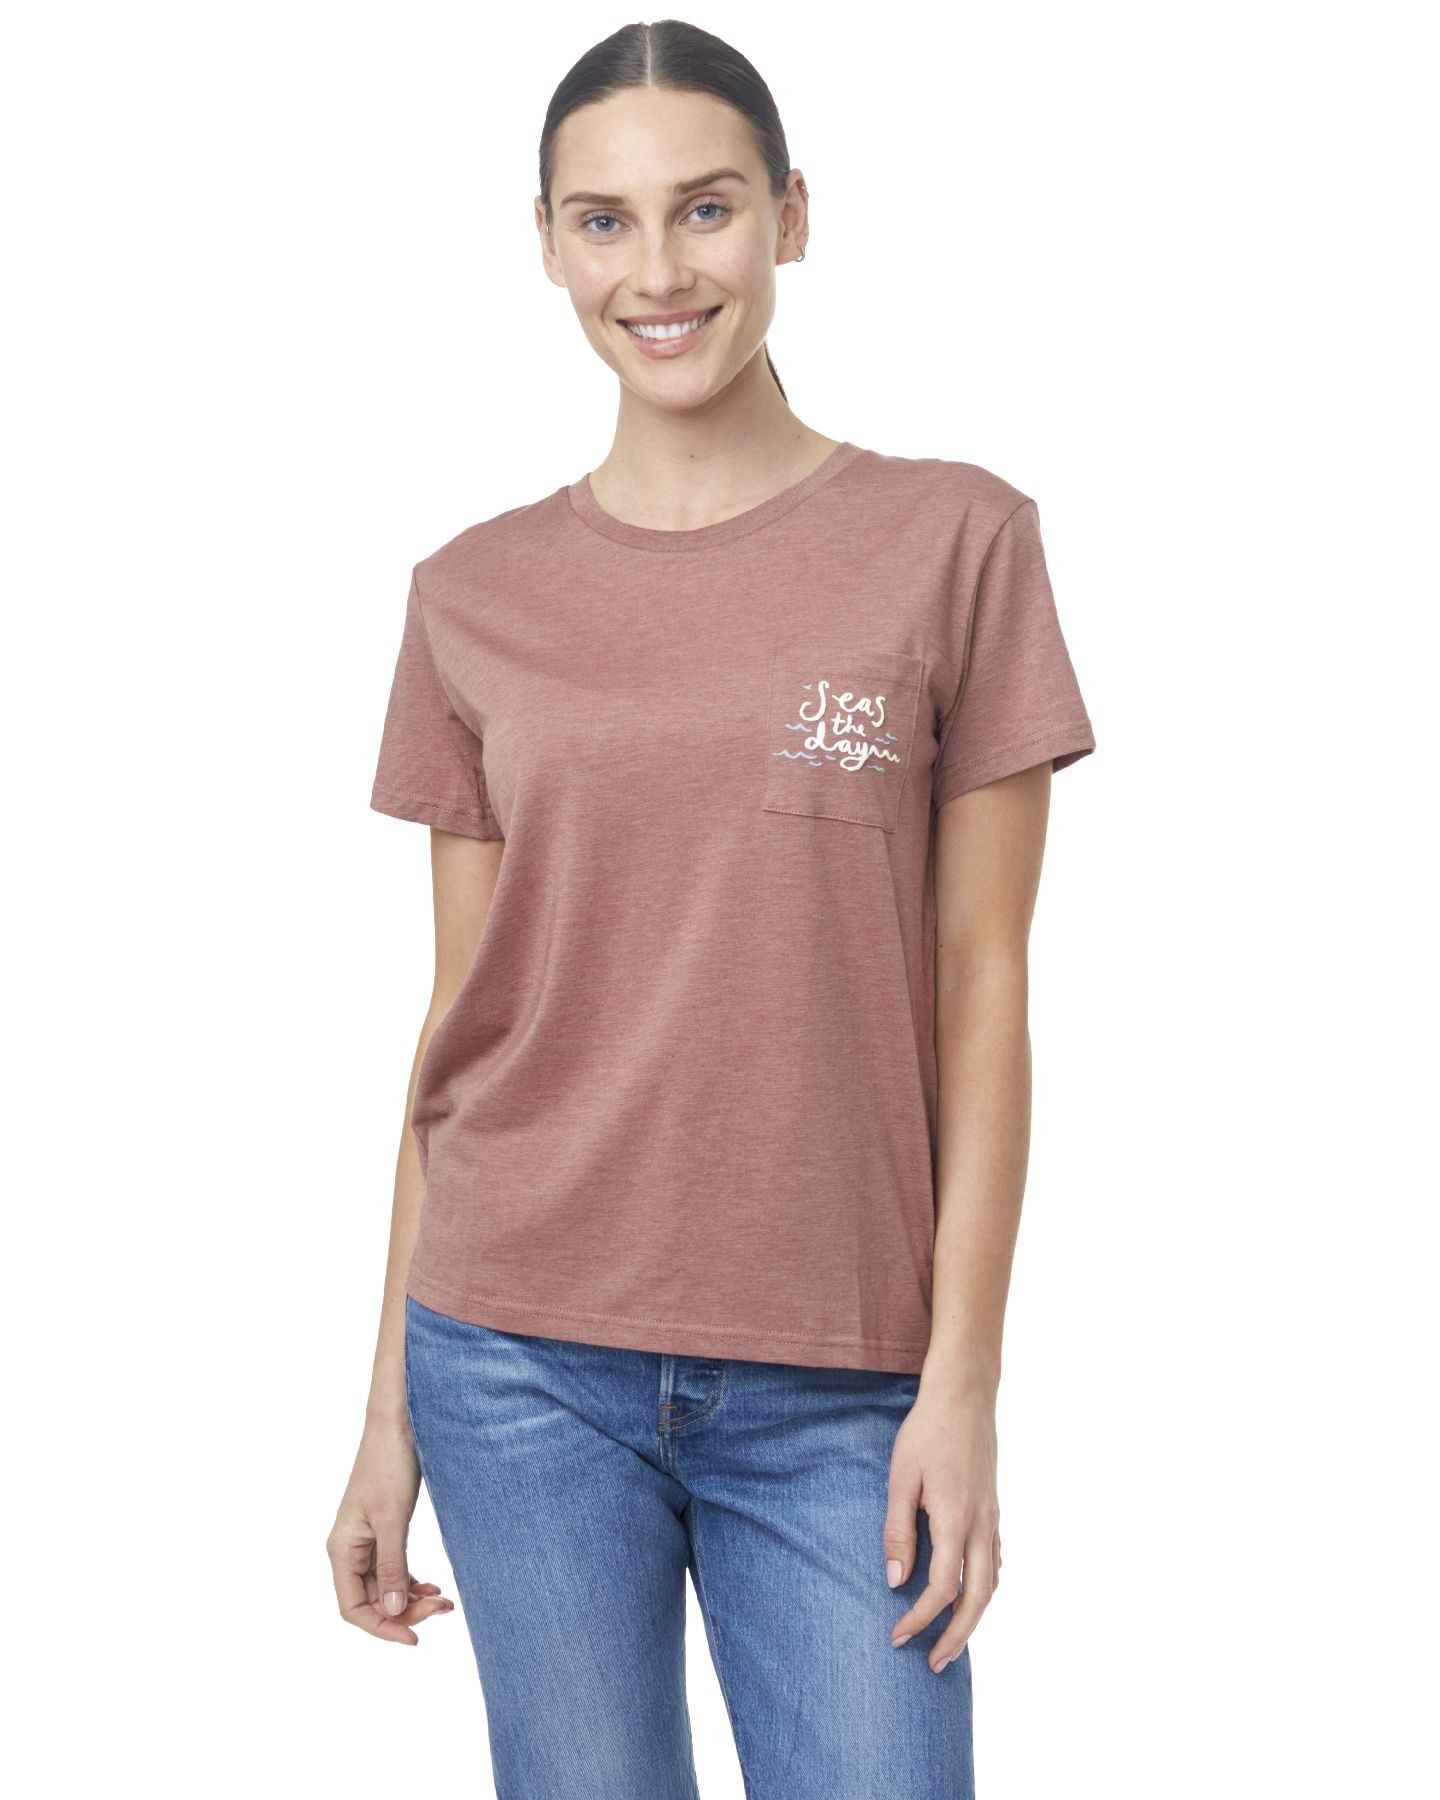 Tentree Seas the Day - T-shirt - Women's